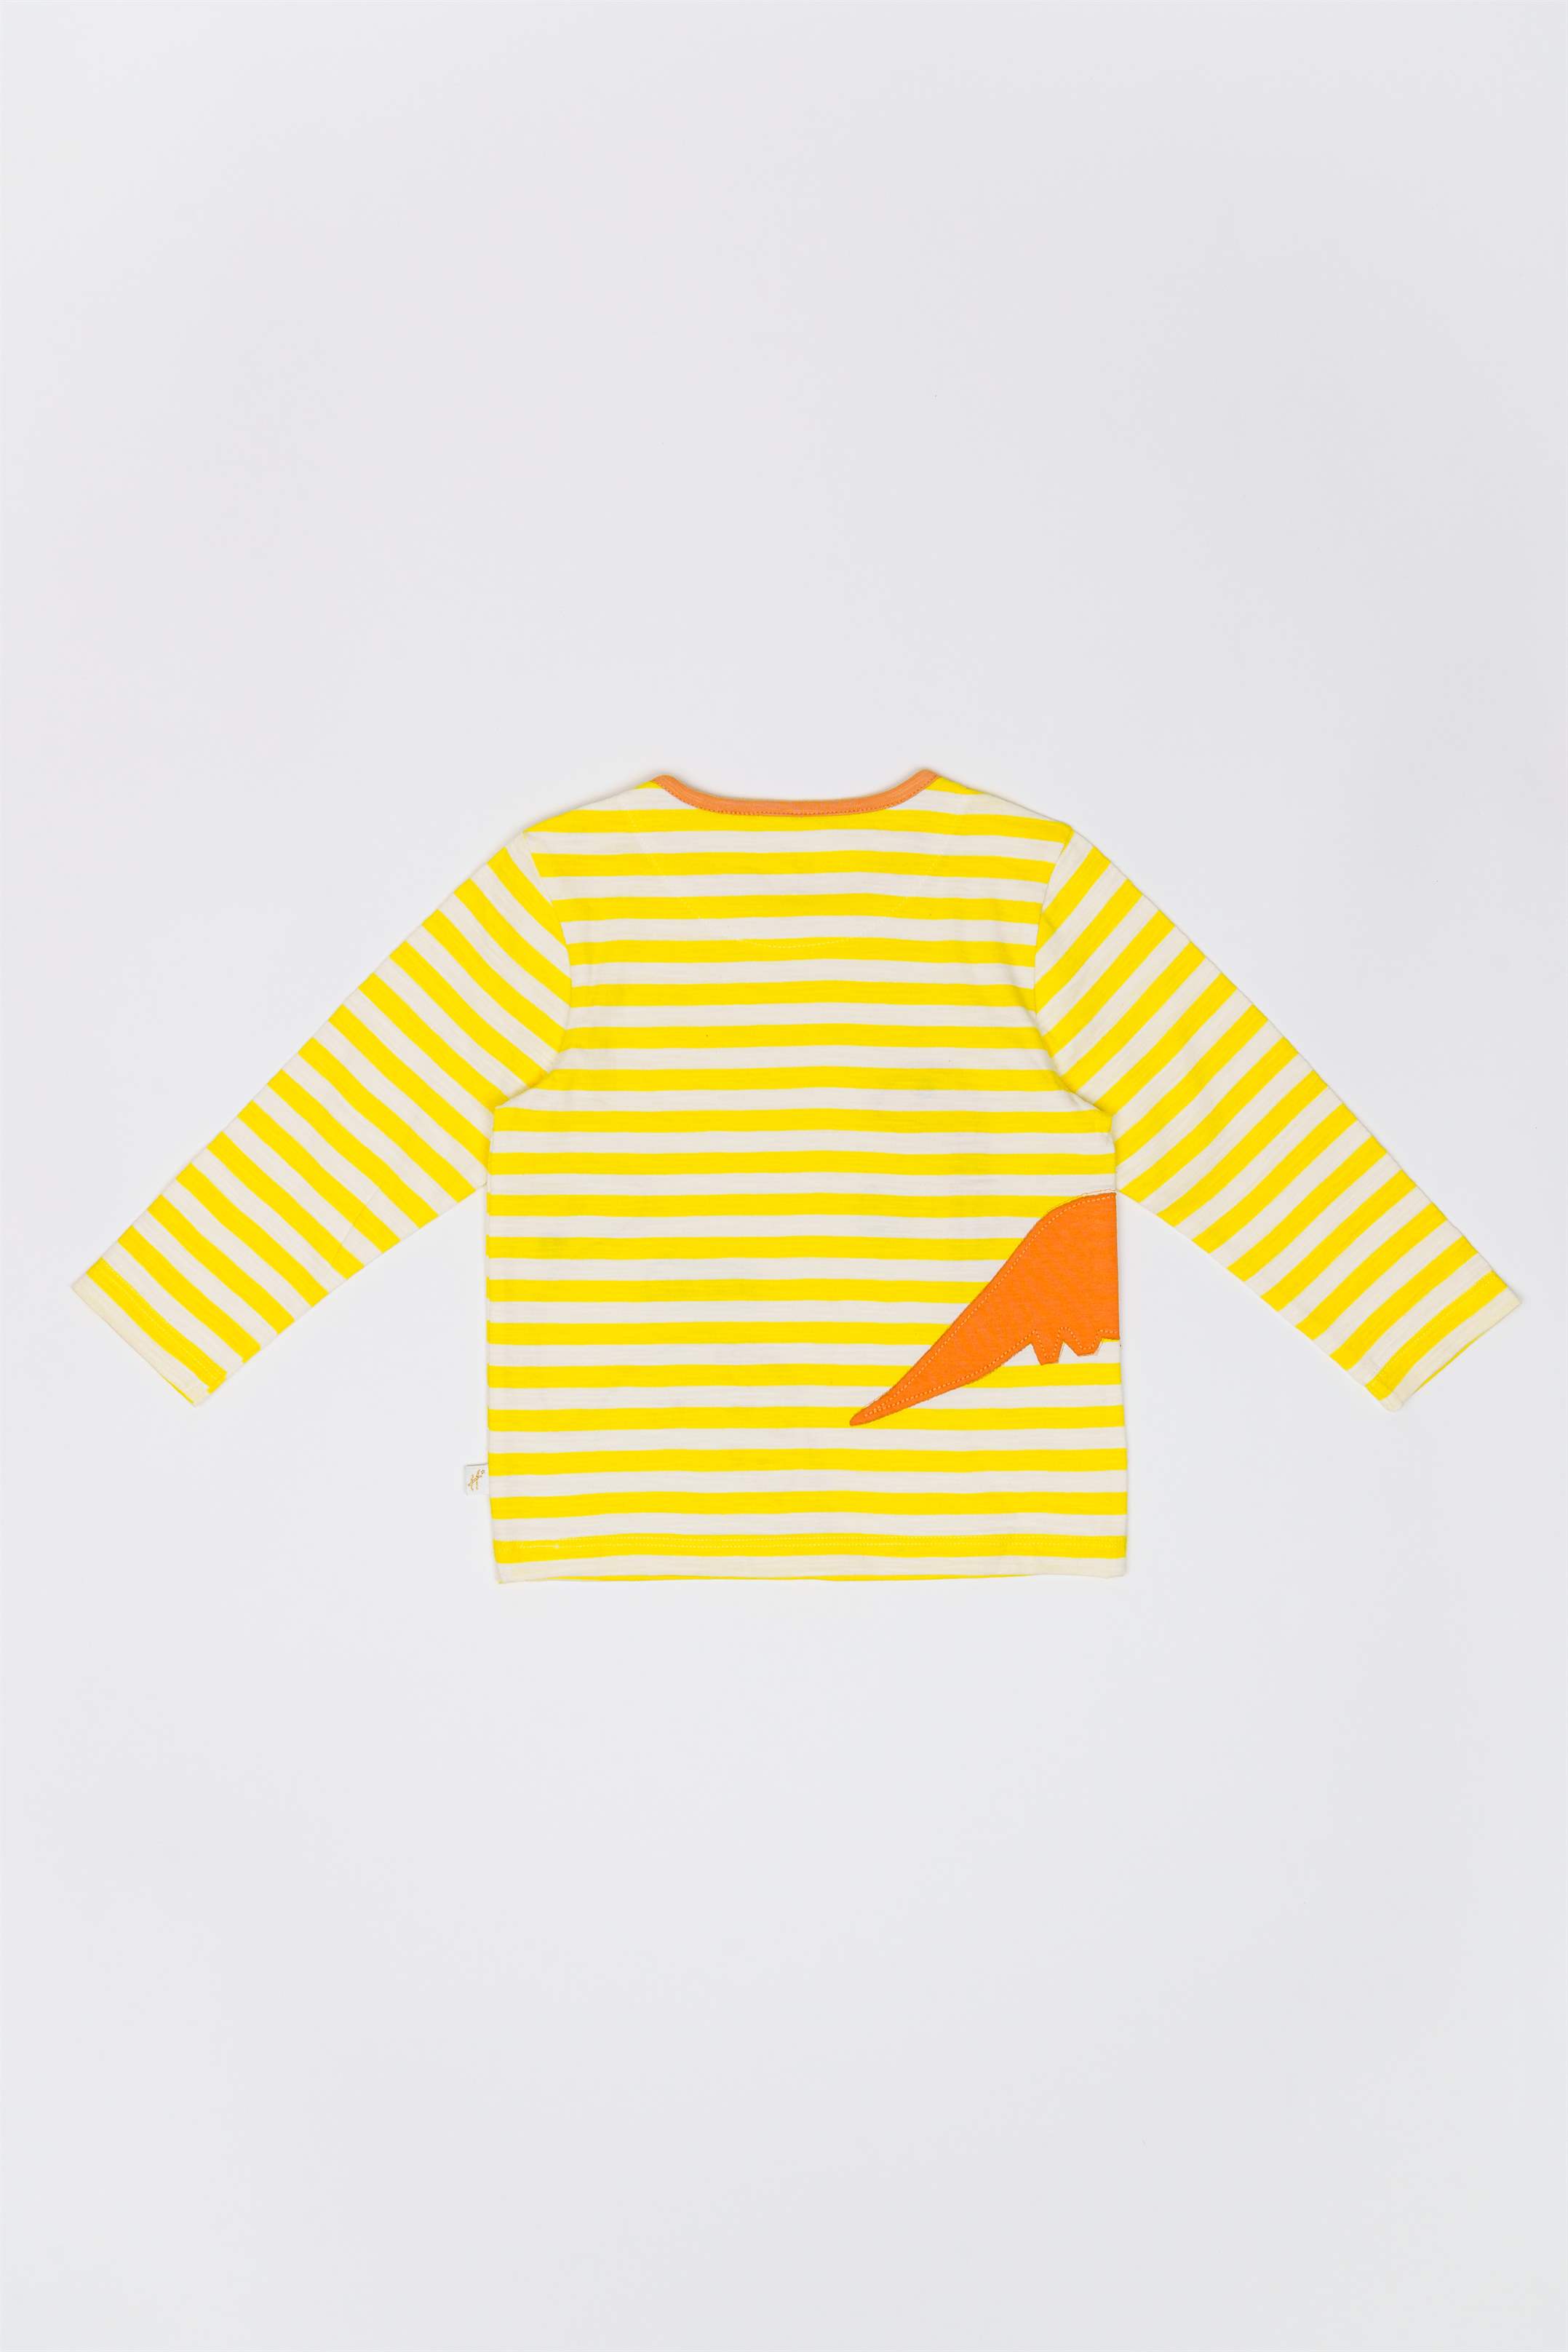 H by Hamleys Infant Boys Striped Yellow T-Shirt